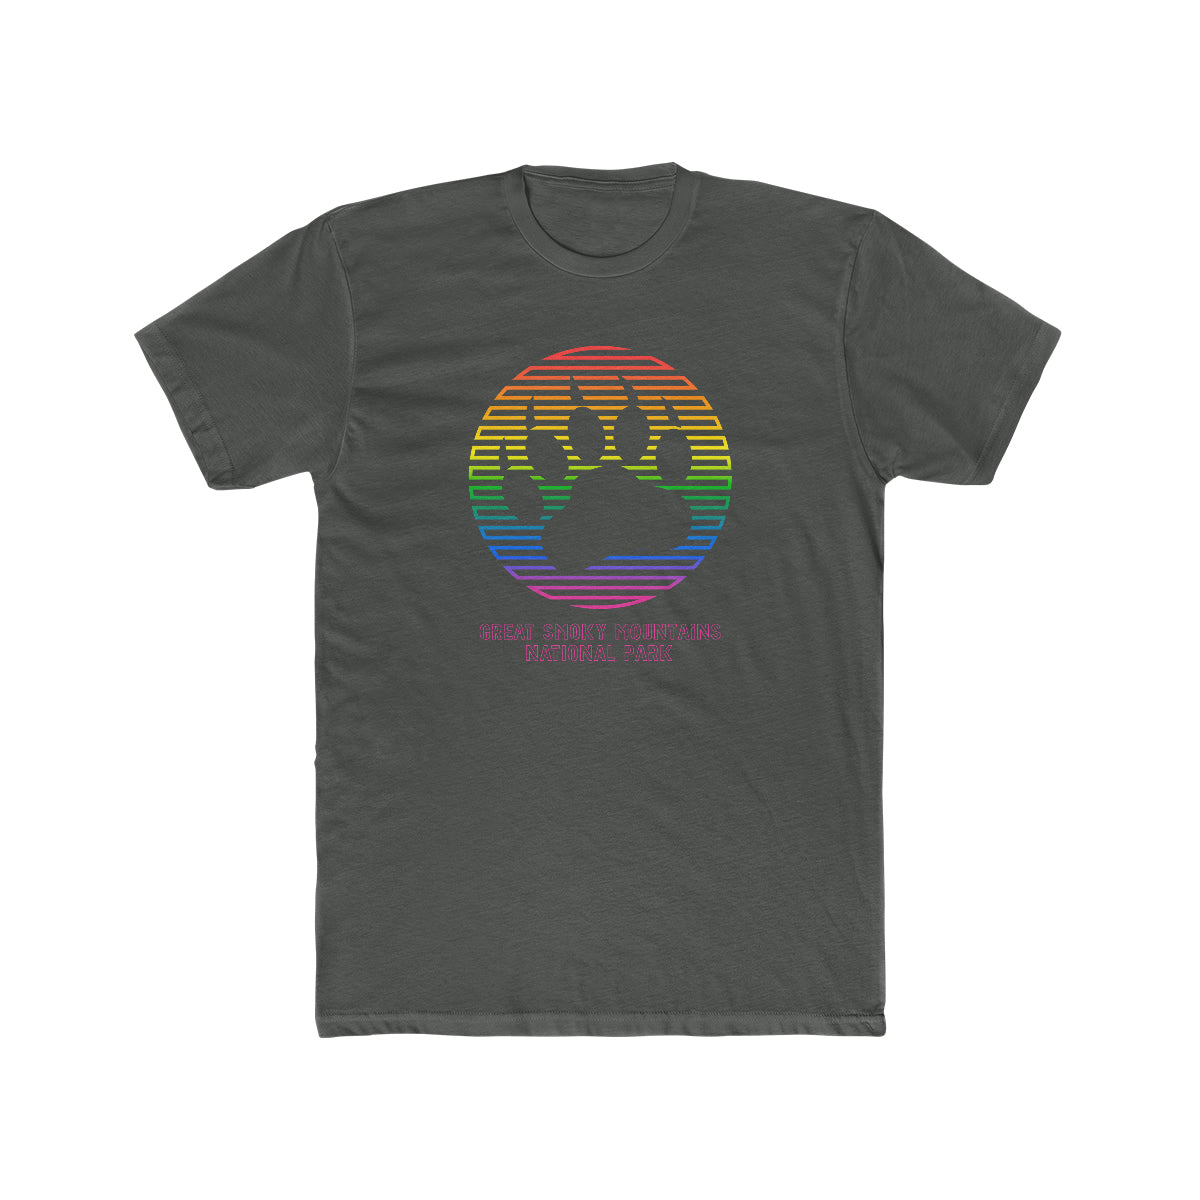 Great Smoky Mountains National Park T-Shirt - Black Bear Track Rainbow